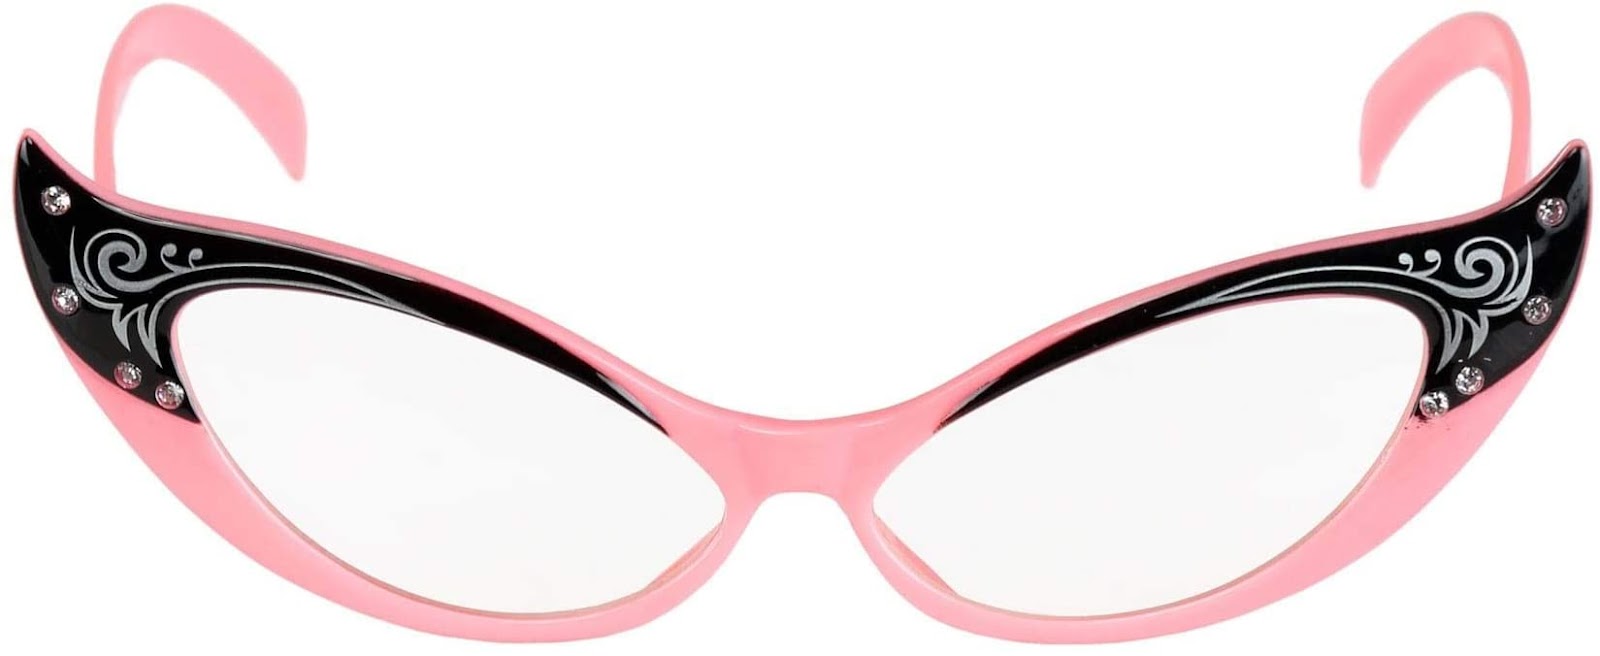 Vintage Cat Eye Glasses Pink Frames with Rhinestones